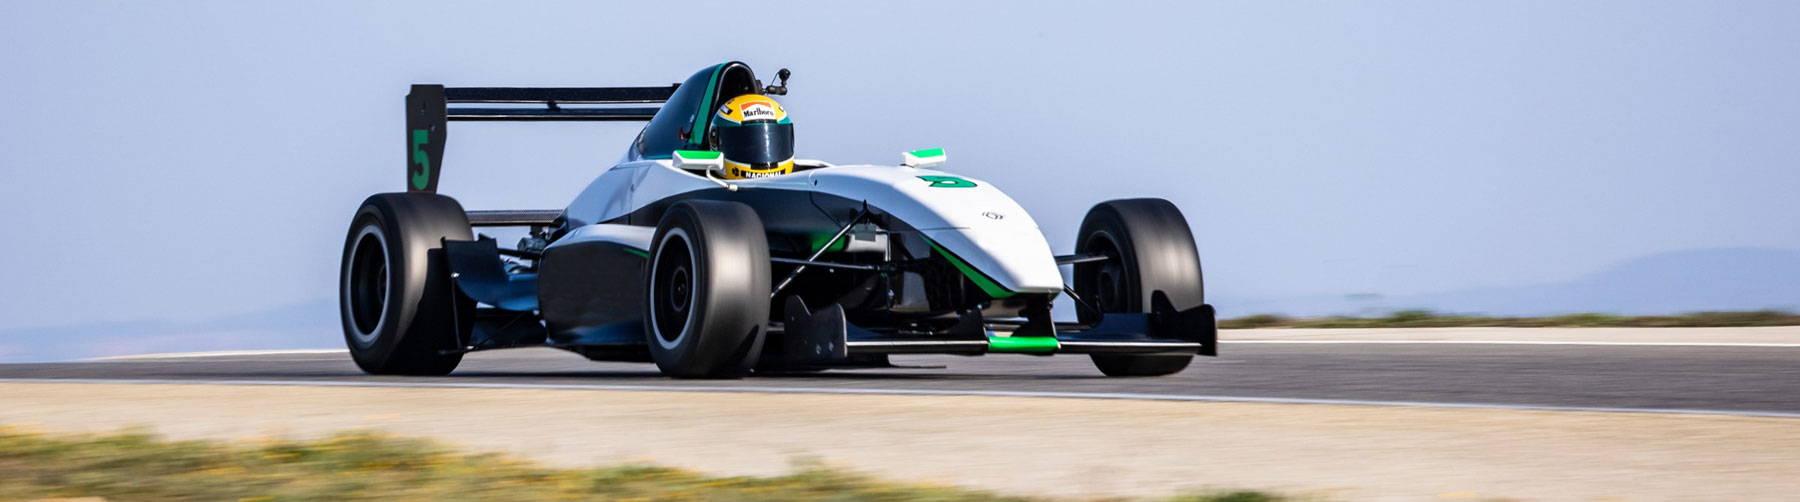 Formule 4 Tatuus T 014 sur circuit